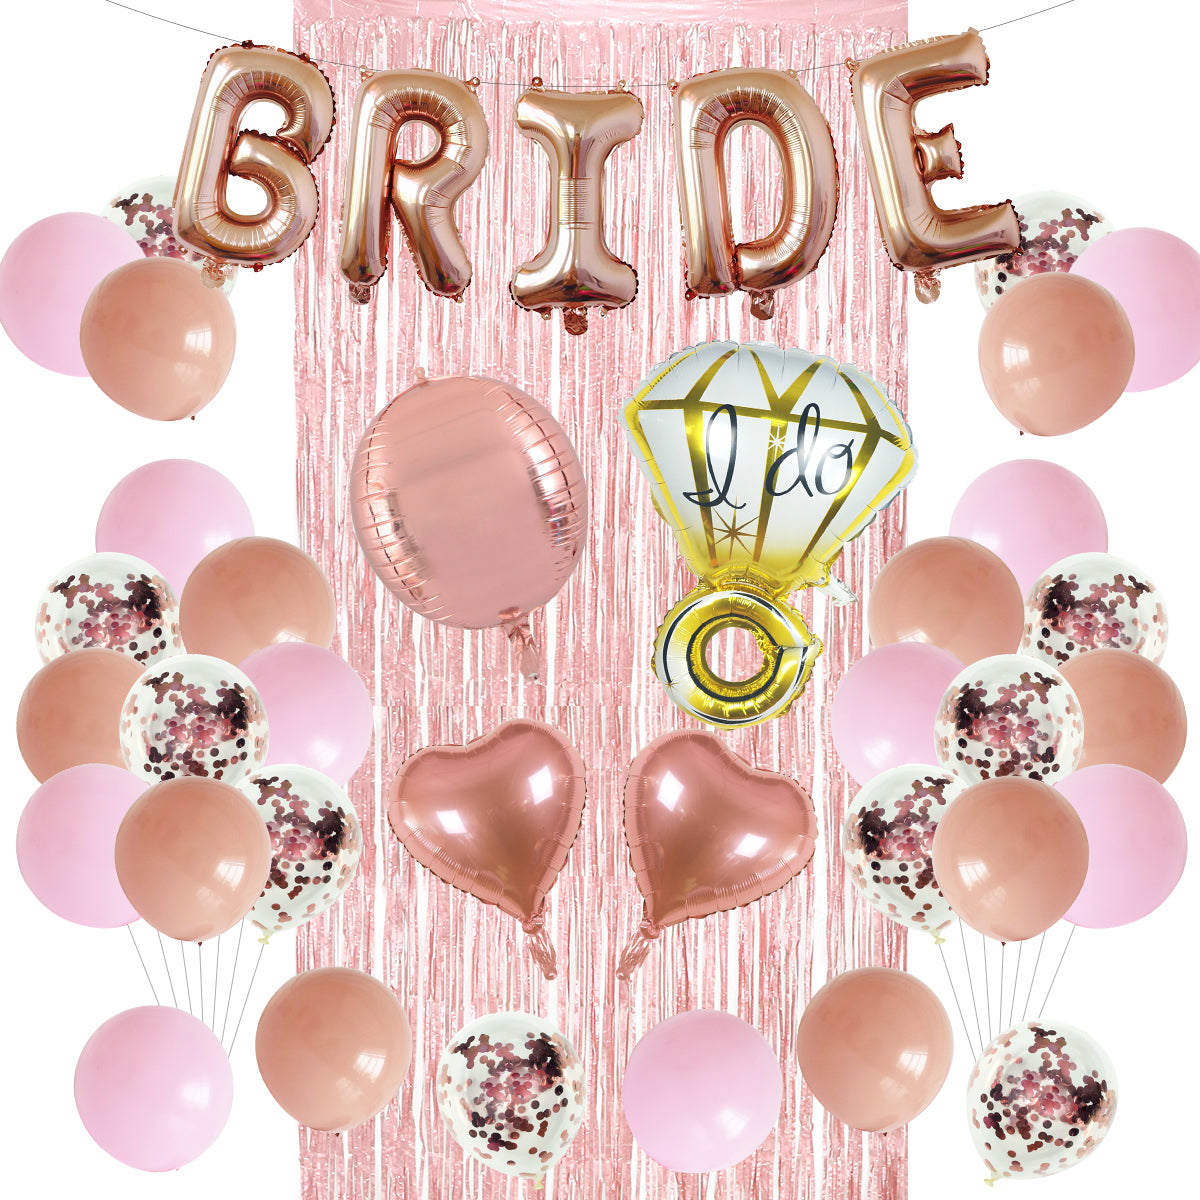 Rose Gold & Pink Bridal Shower Decoration Kit - 40 Pieces!